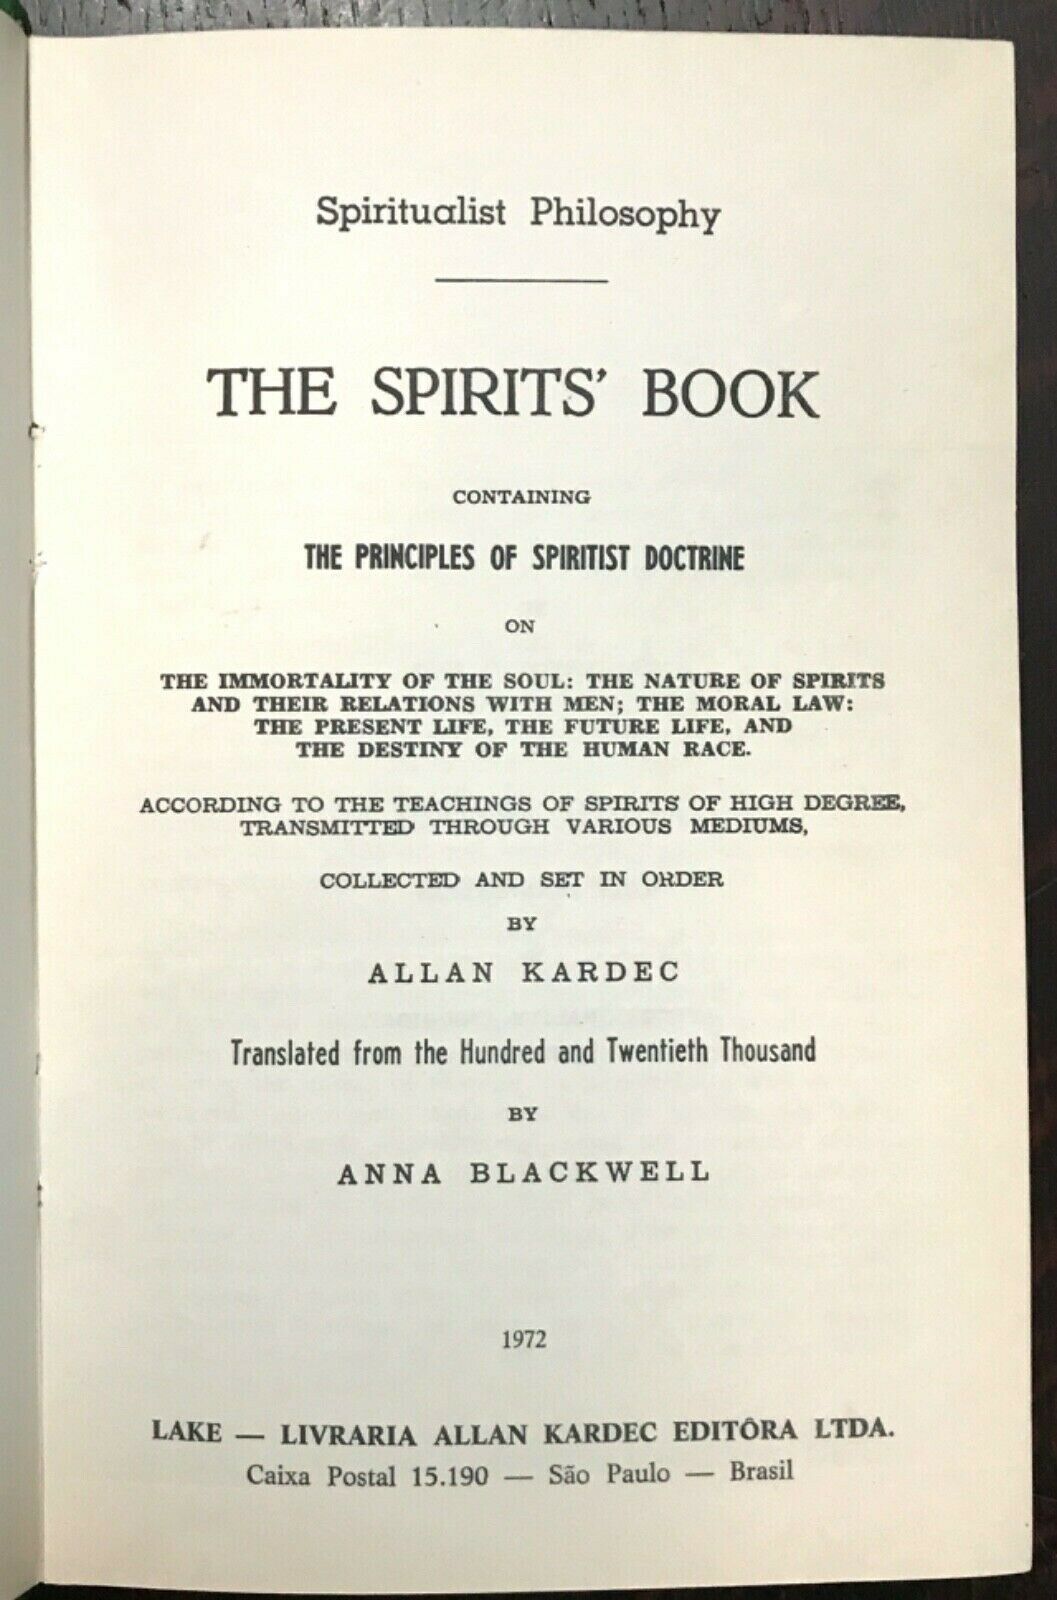 The Spirits' Book (Cosimo Classics Sacred Texts) by Allan Kardec